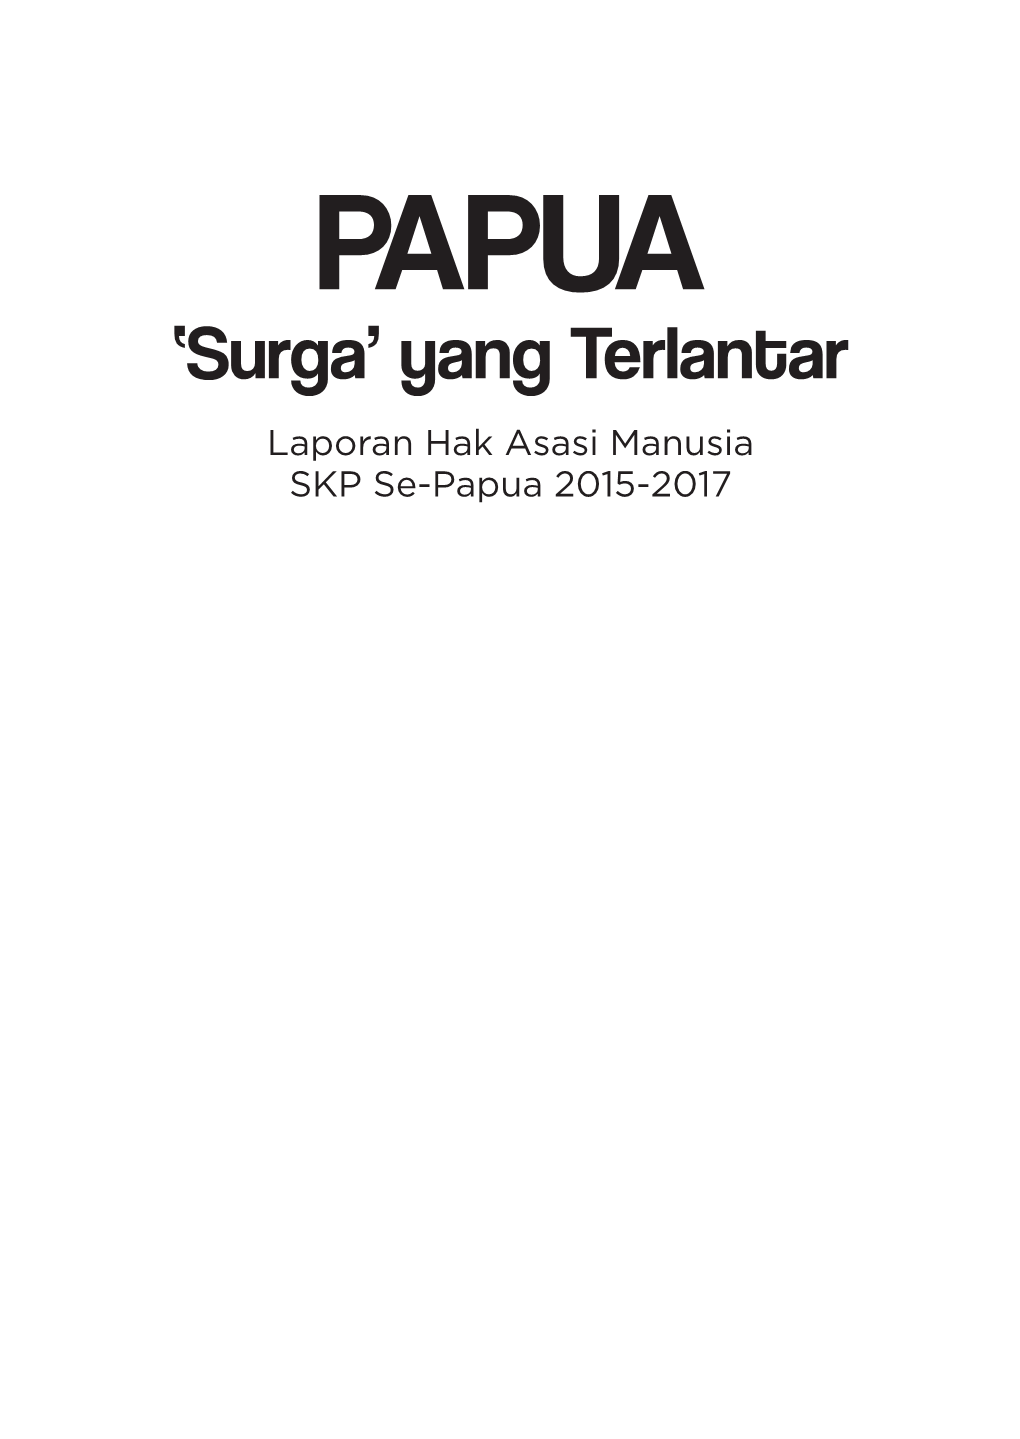 Yang Terlantar Laporan Hak Asasi Manusia SKP Se-Papua 2015-2017 Undang-Undang Republik Indonesia Nomor 28 Tahun 2014 Tentang Hak Cipta